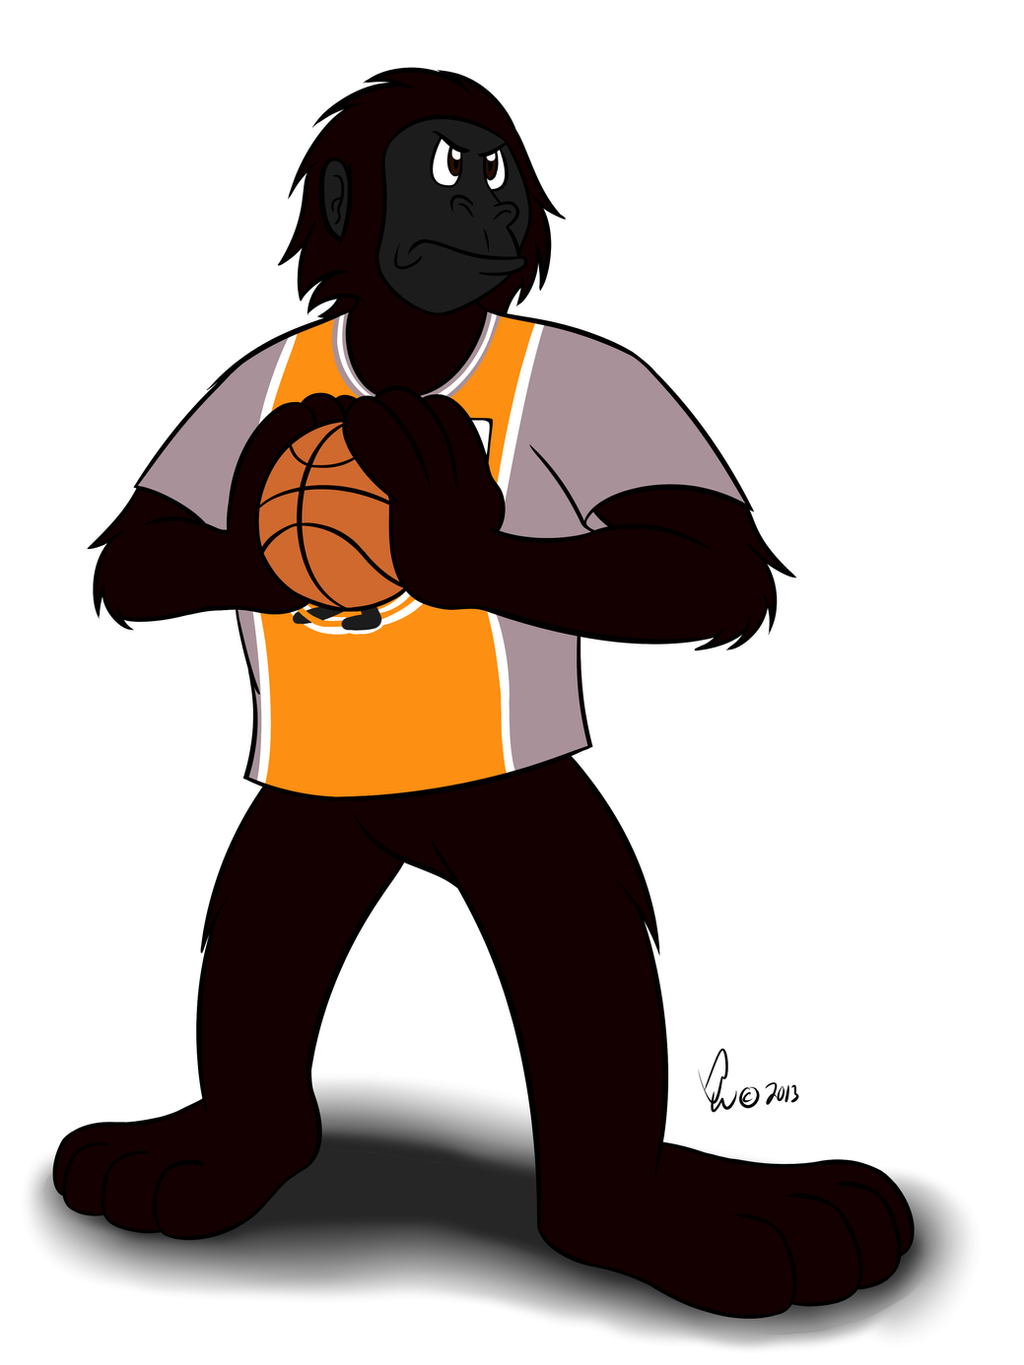 NBA Mascots - Go the Gorilla by Bleuxwolf on DeviantArt